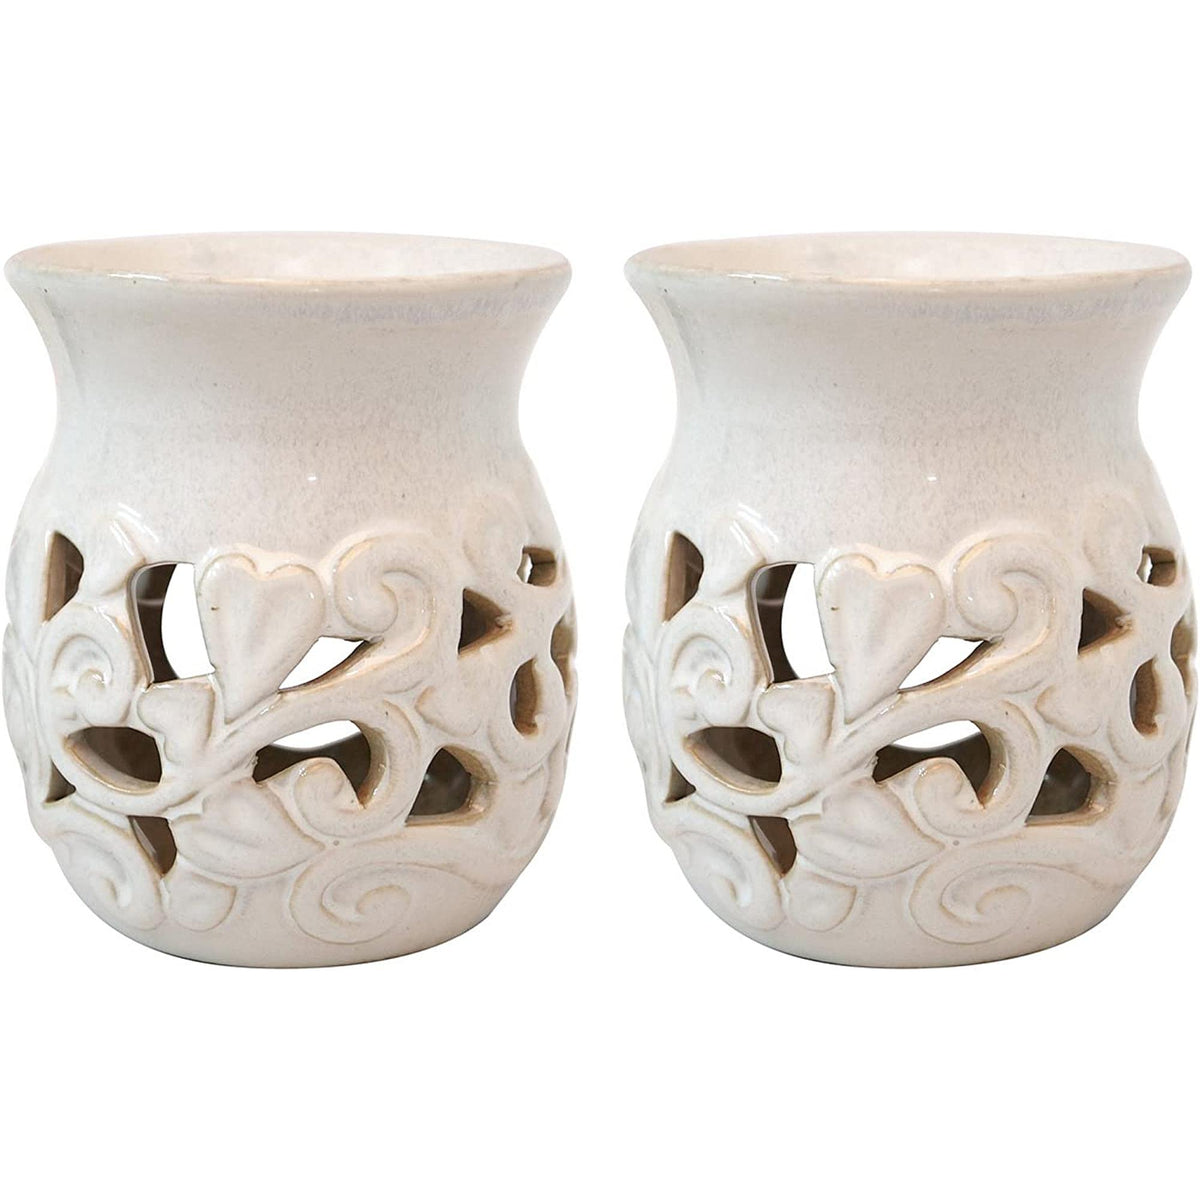 HOSLEY®  Ceramic Oil Warmer, White Glazed Set of 2 ,  4.3 Inches High